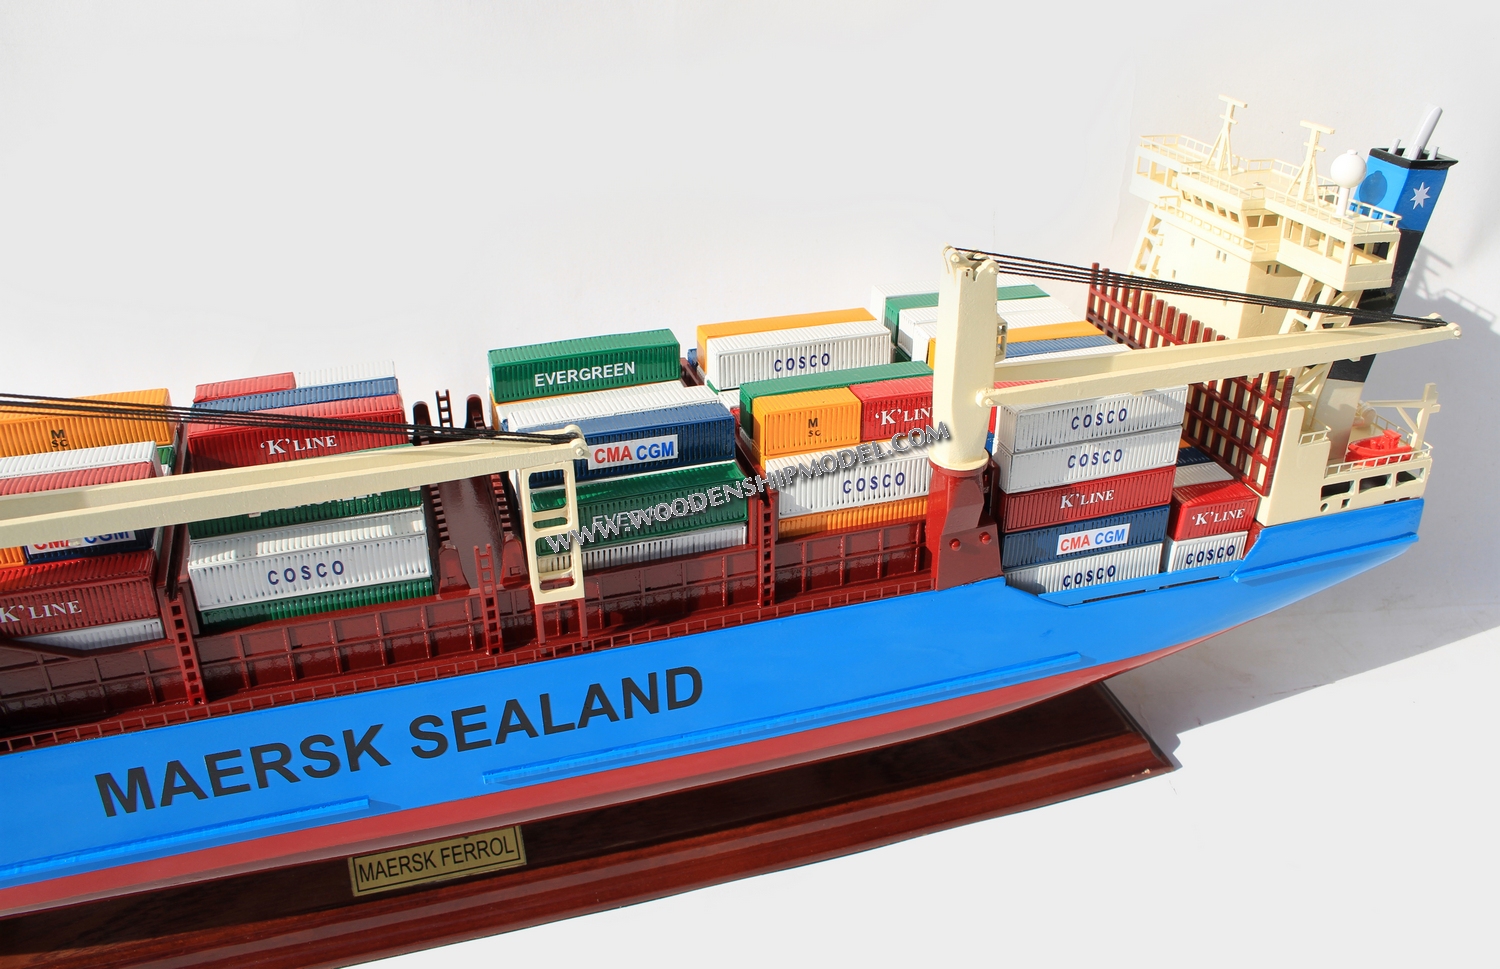 Container Ship Model Maersk Ferrol